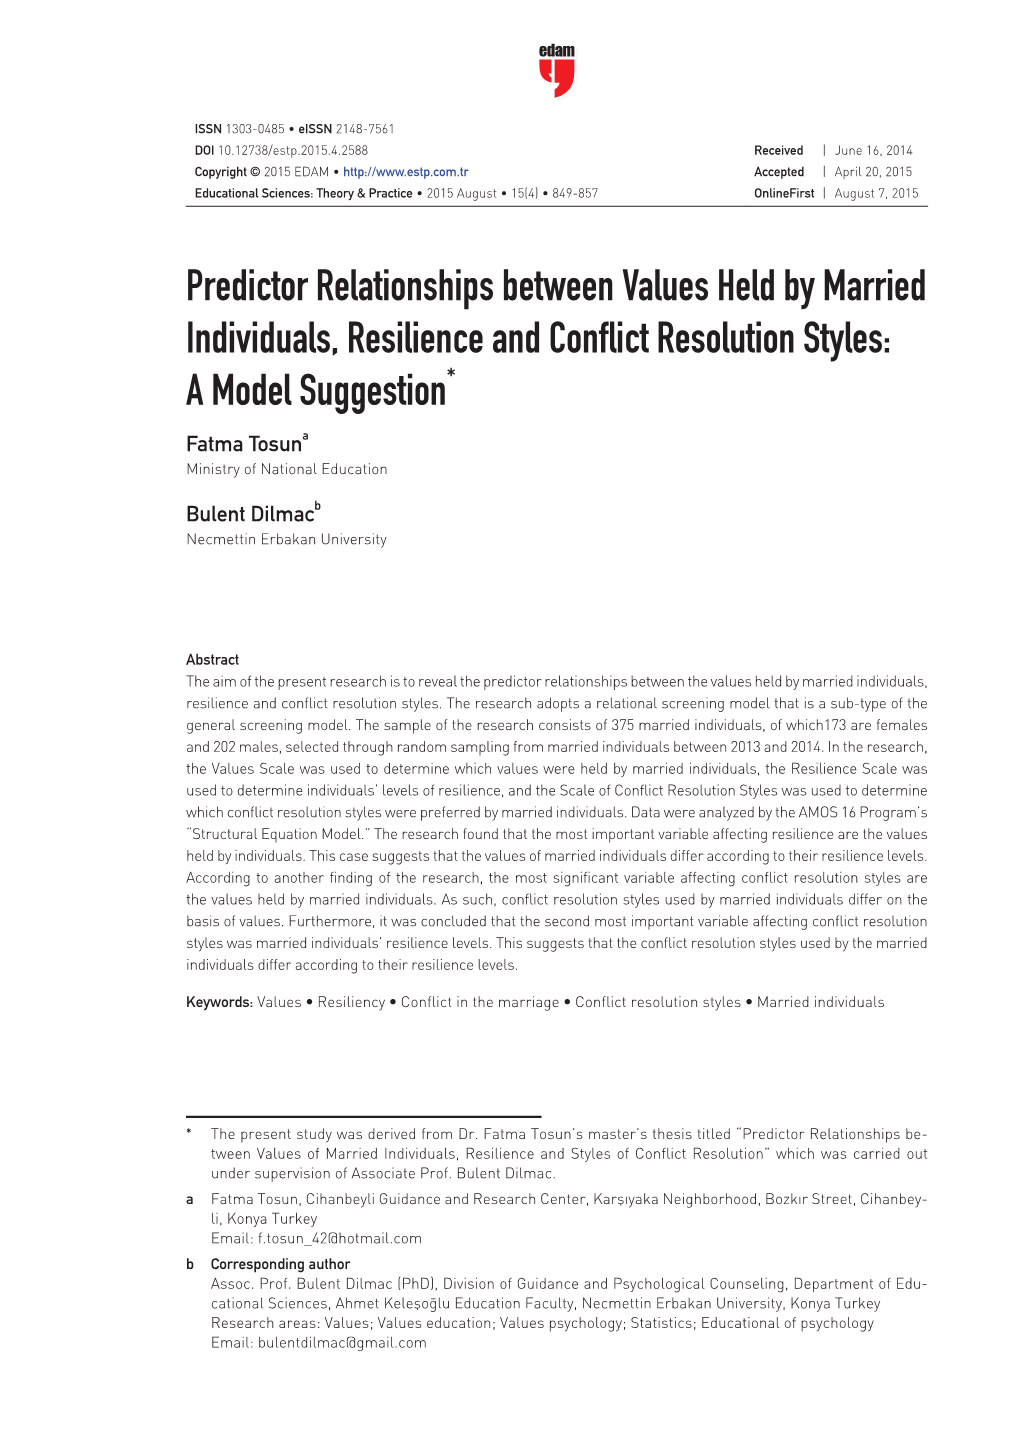 Predictor Relationships Between Values Held by Married